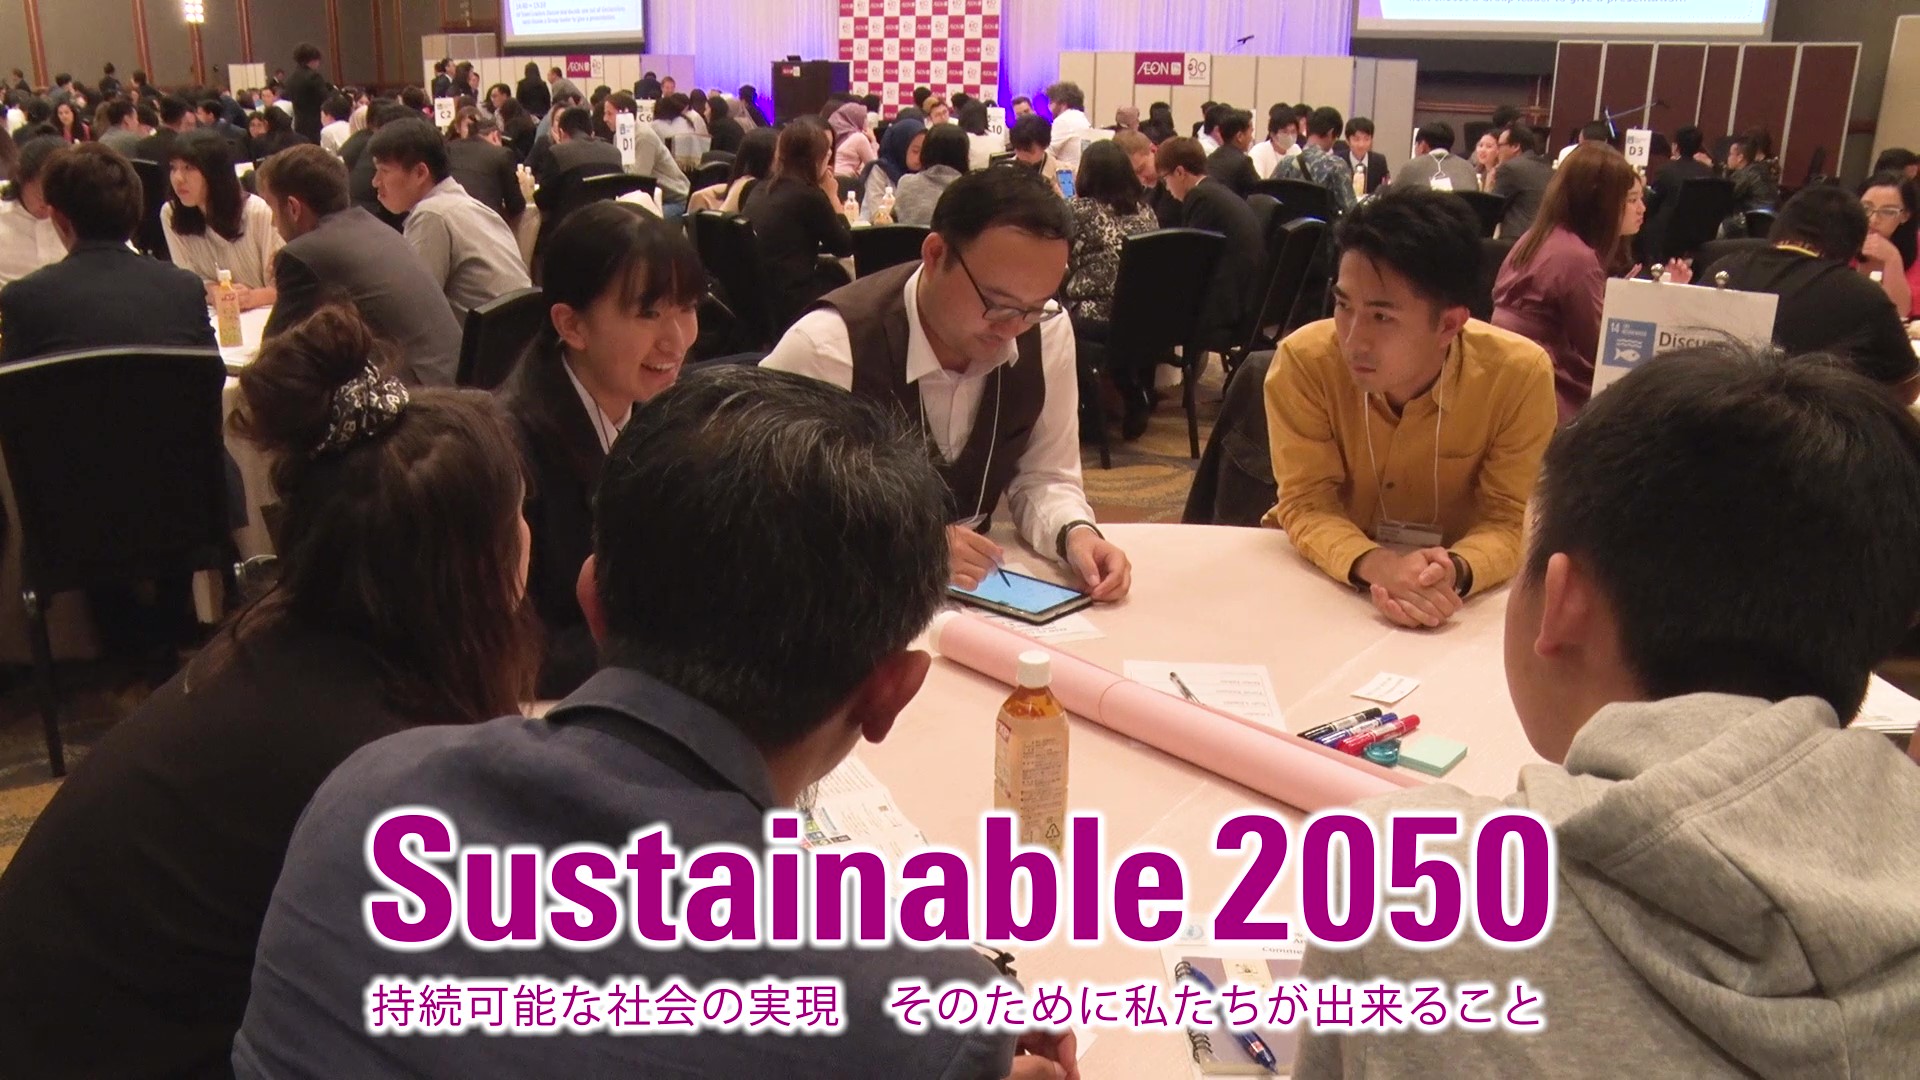 Sustainable 2050 ～接続可能な社会の実現 そのために私たちが出来ること～